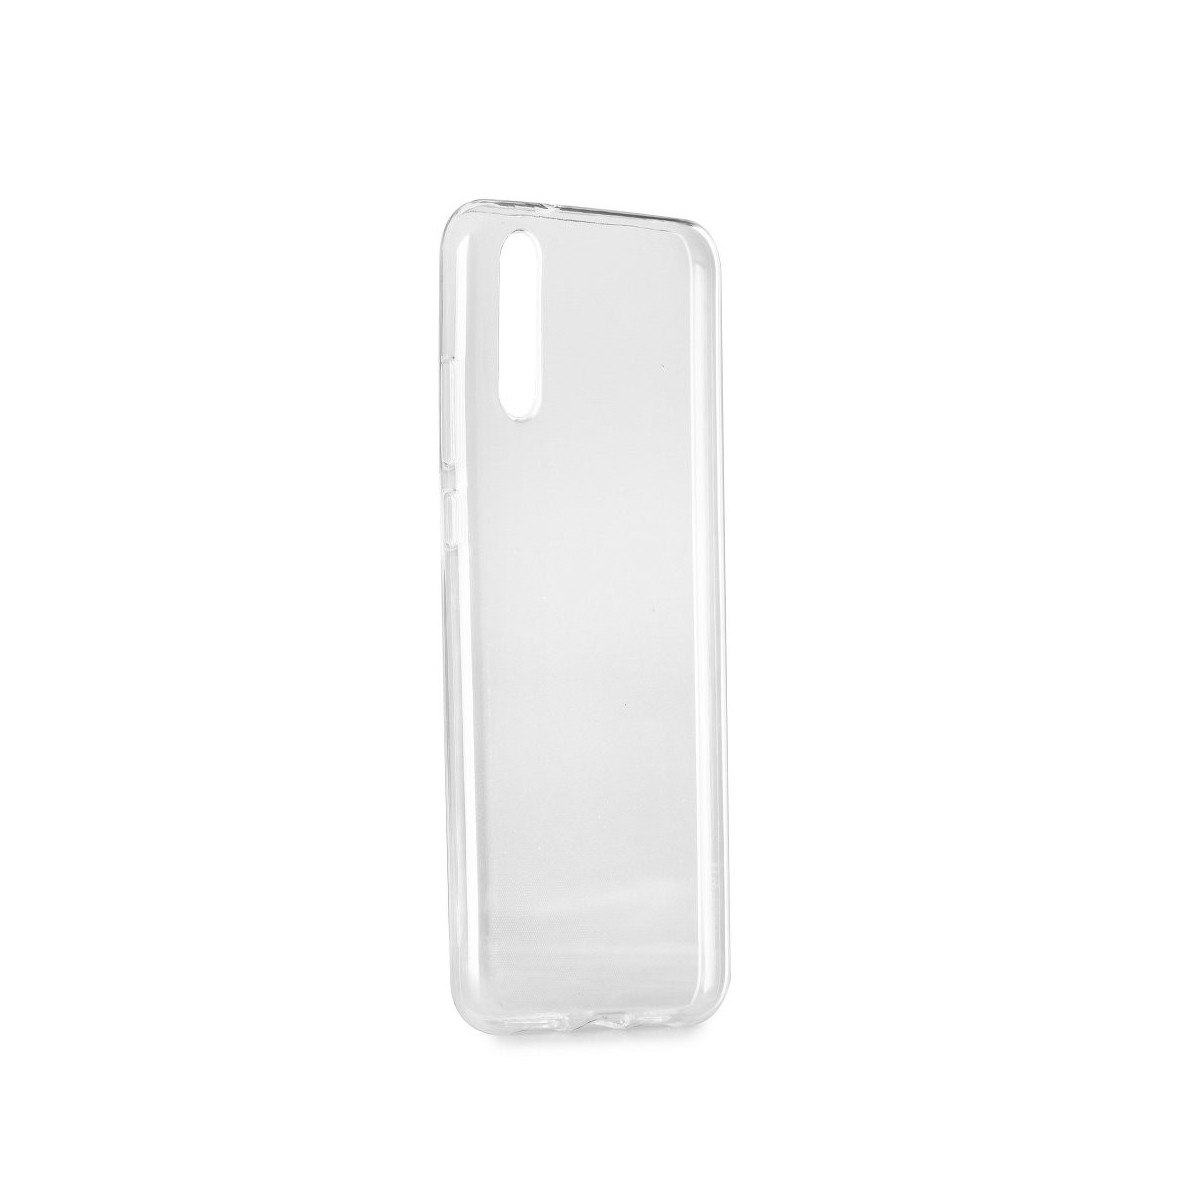 Coque Galaxy A50 Transparente souple - Crazy Kase